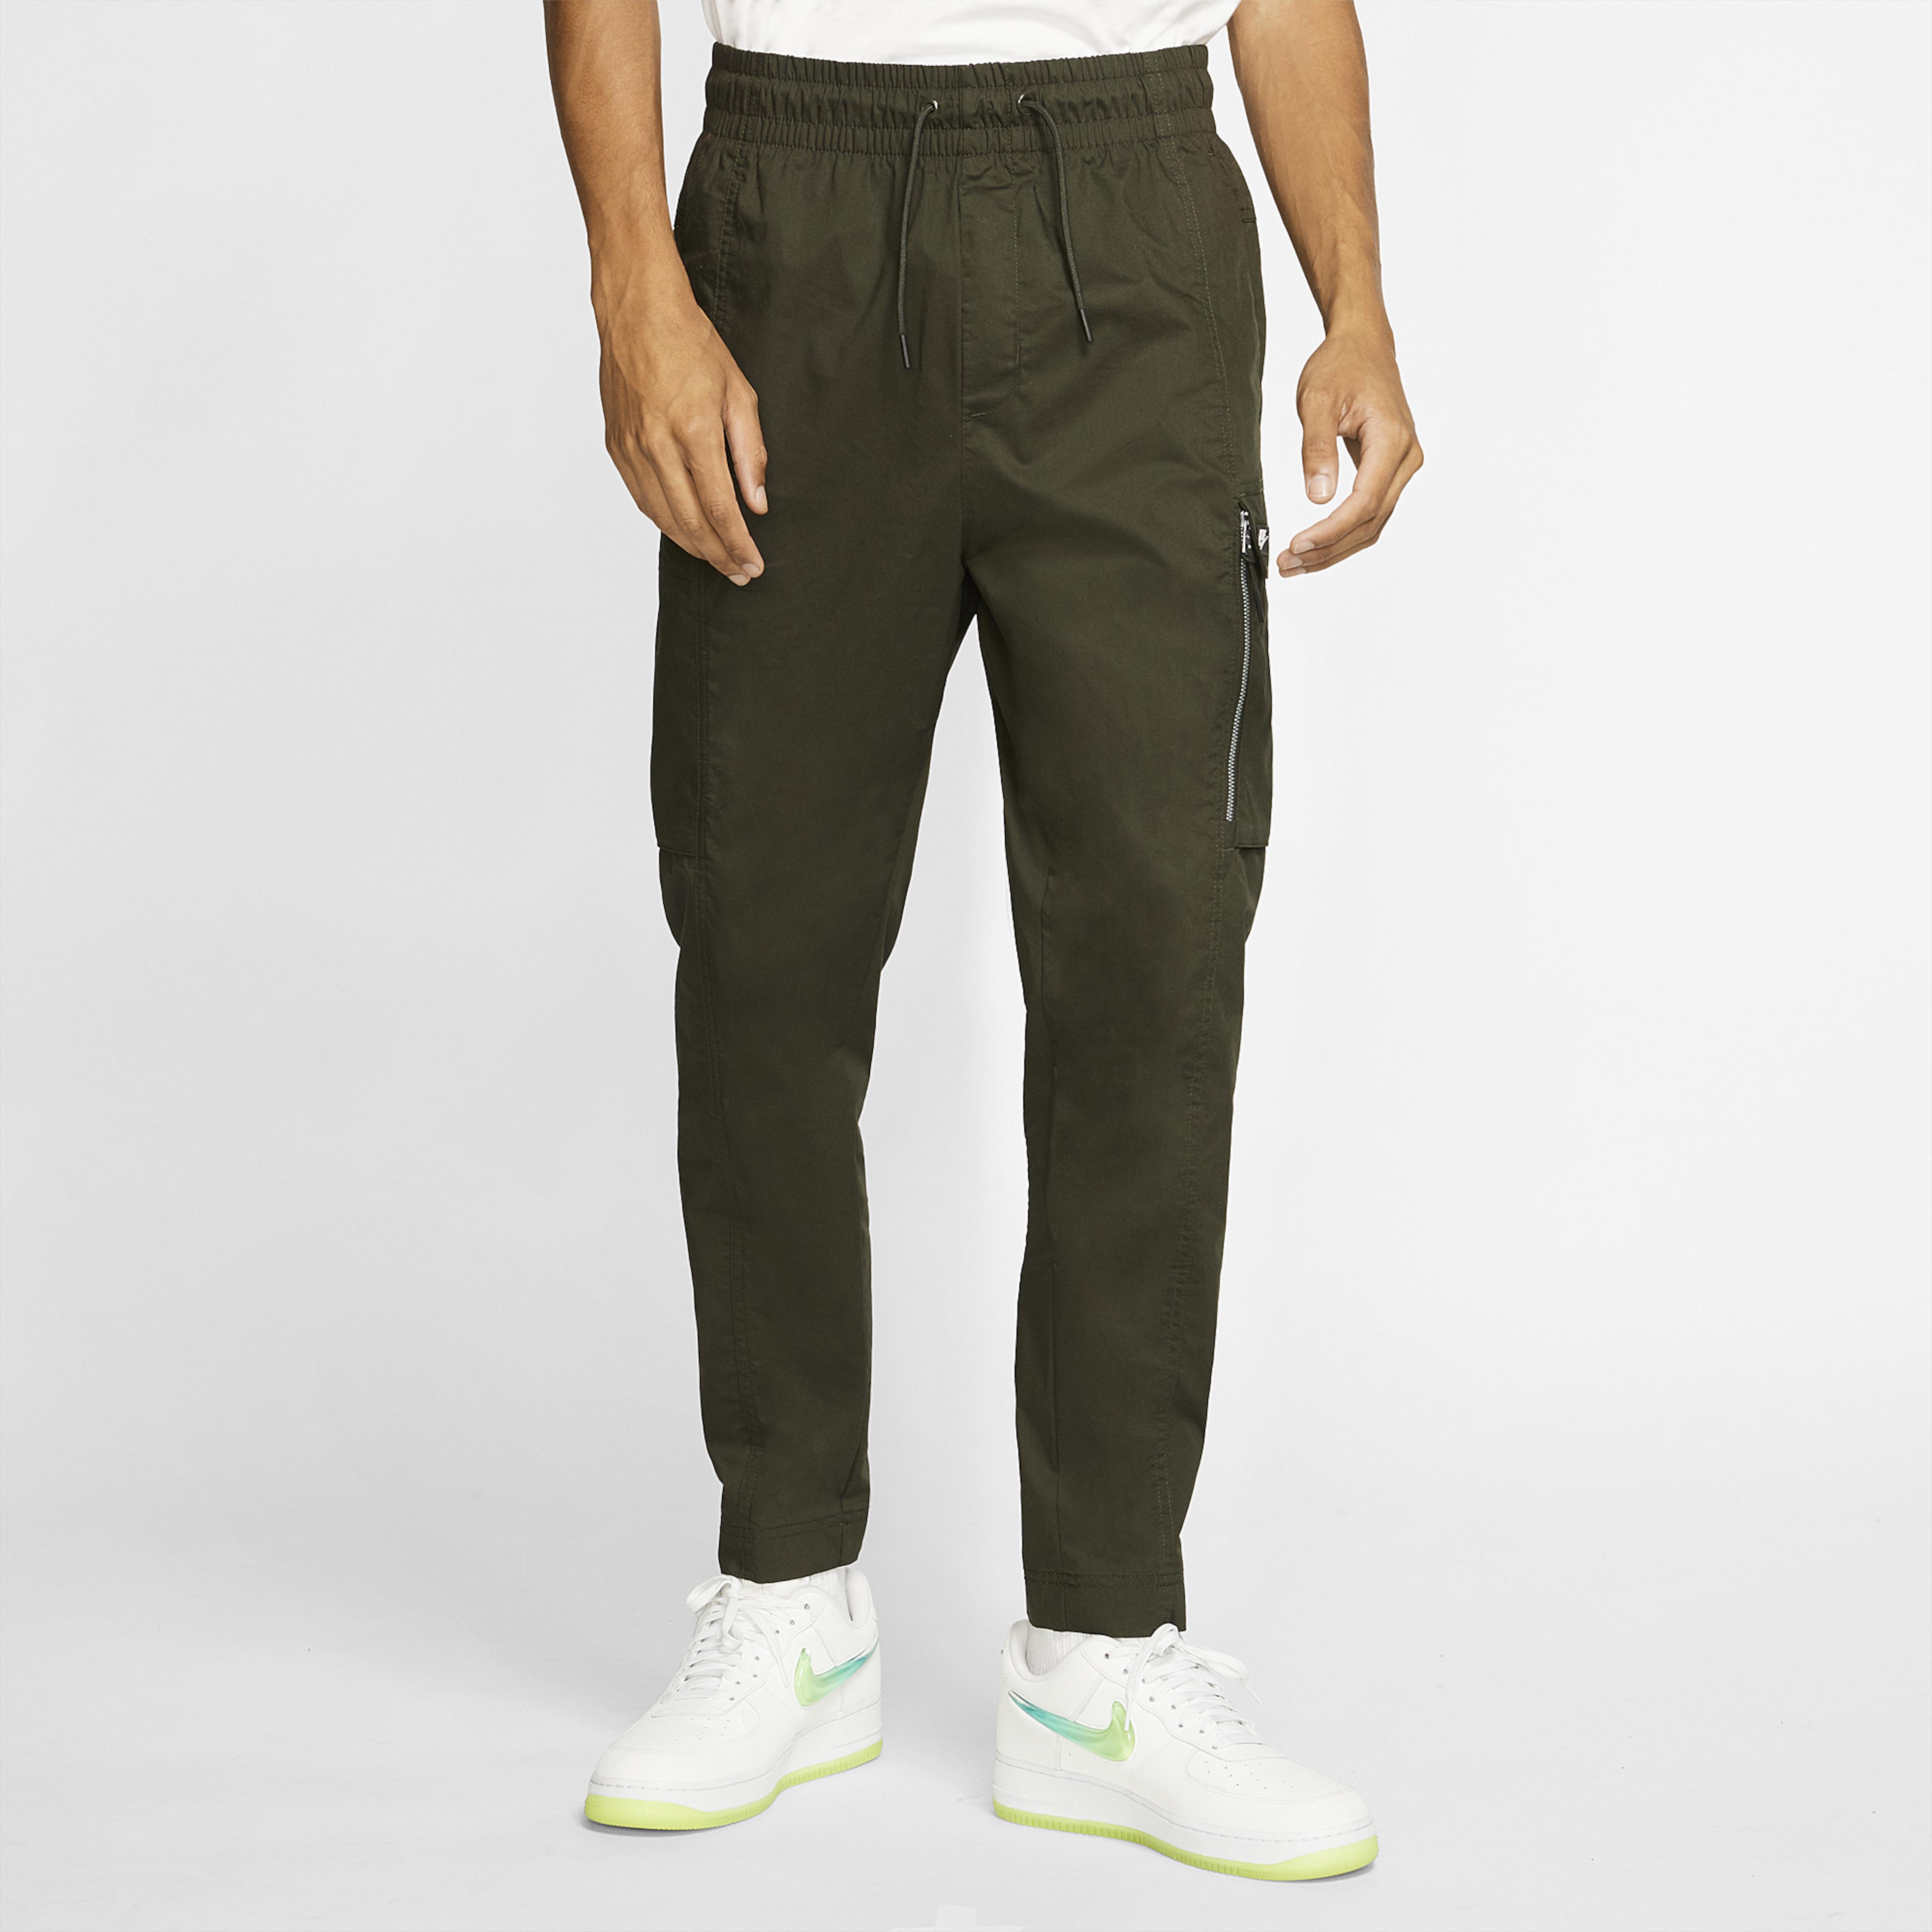 Nike Cotton Nsw Cargo Street Pants in 